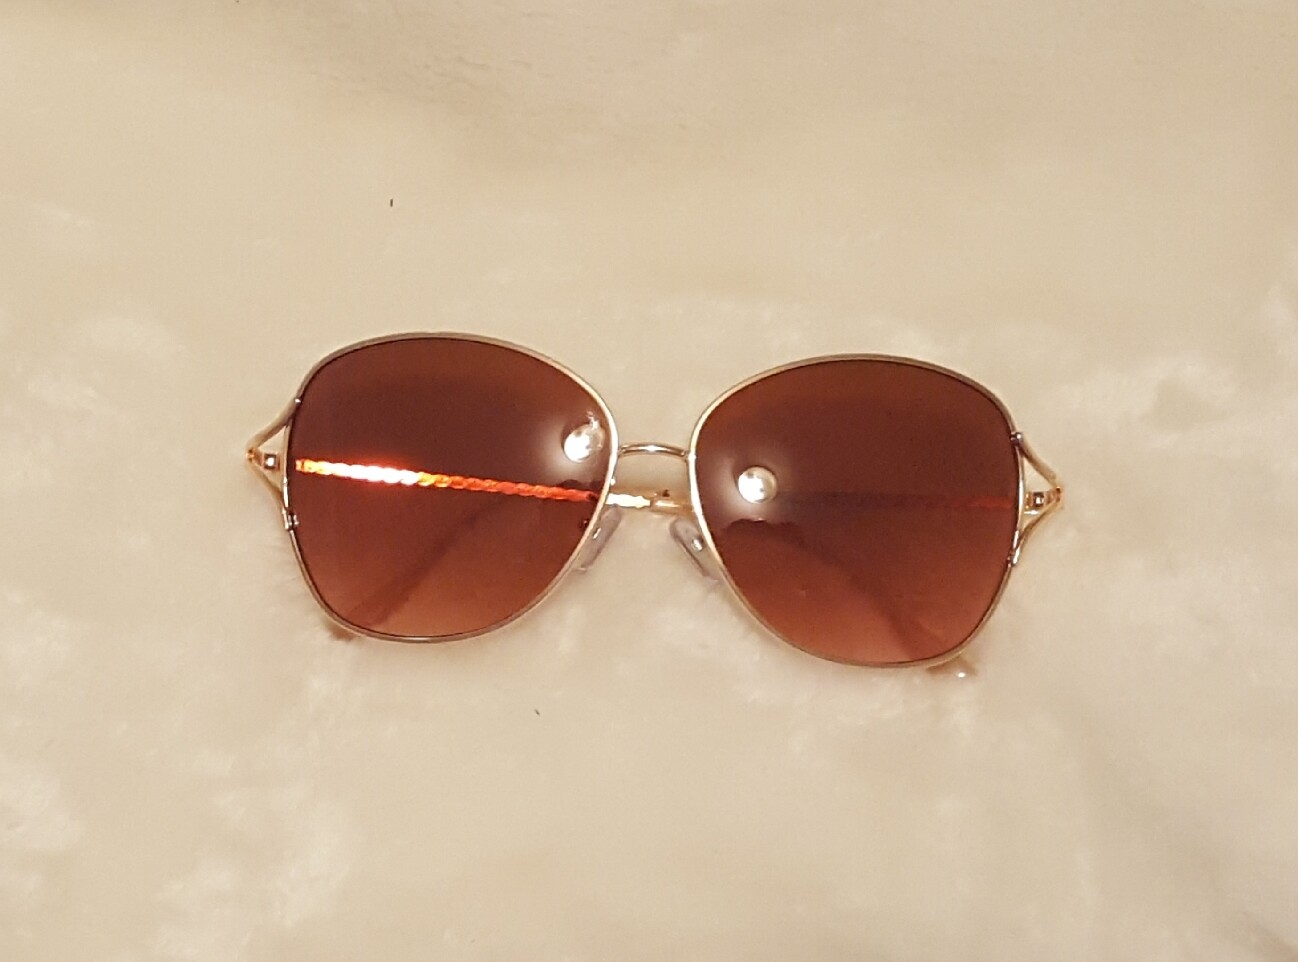 Shaded Tint Sunglasses